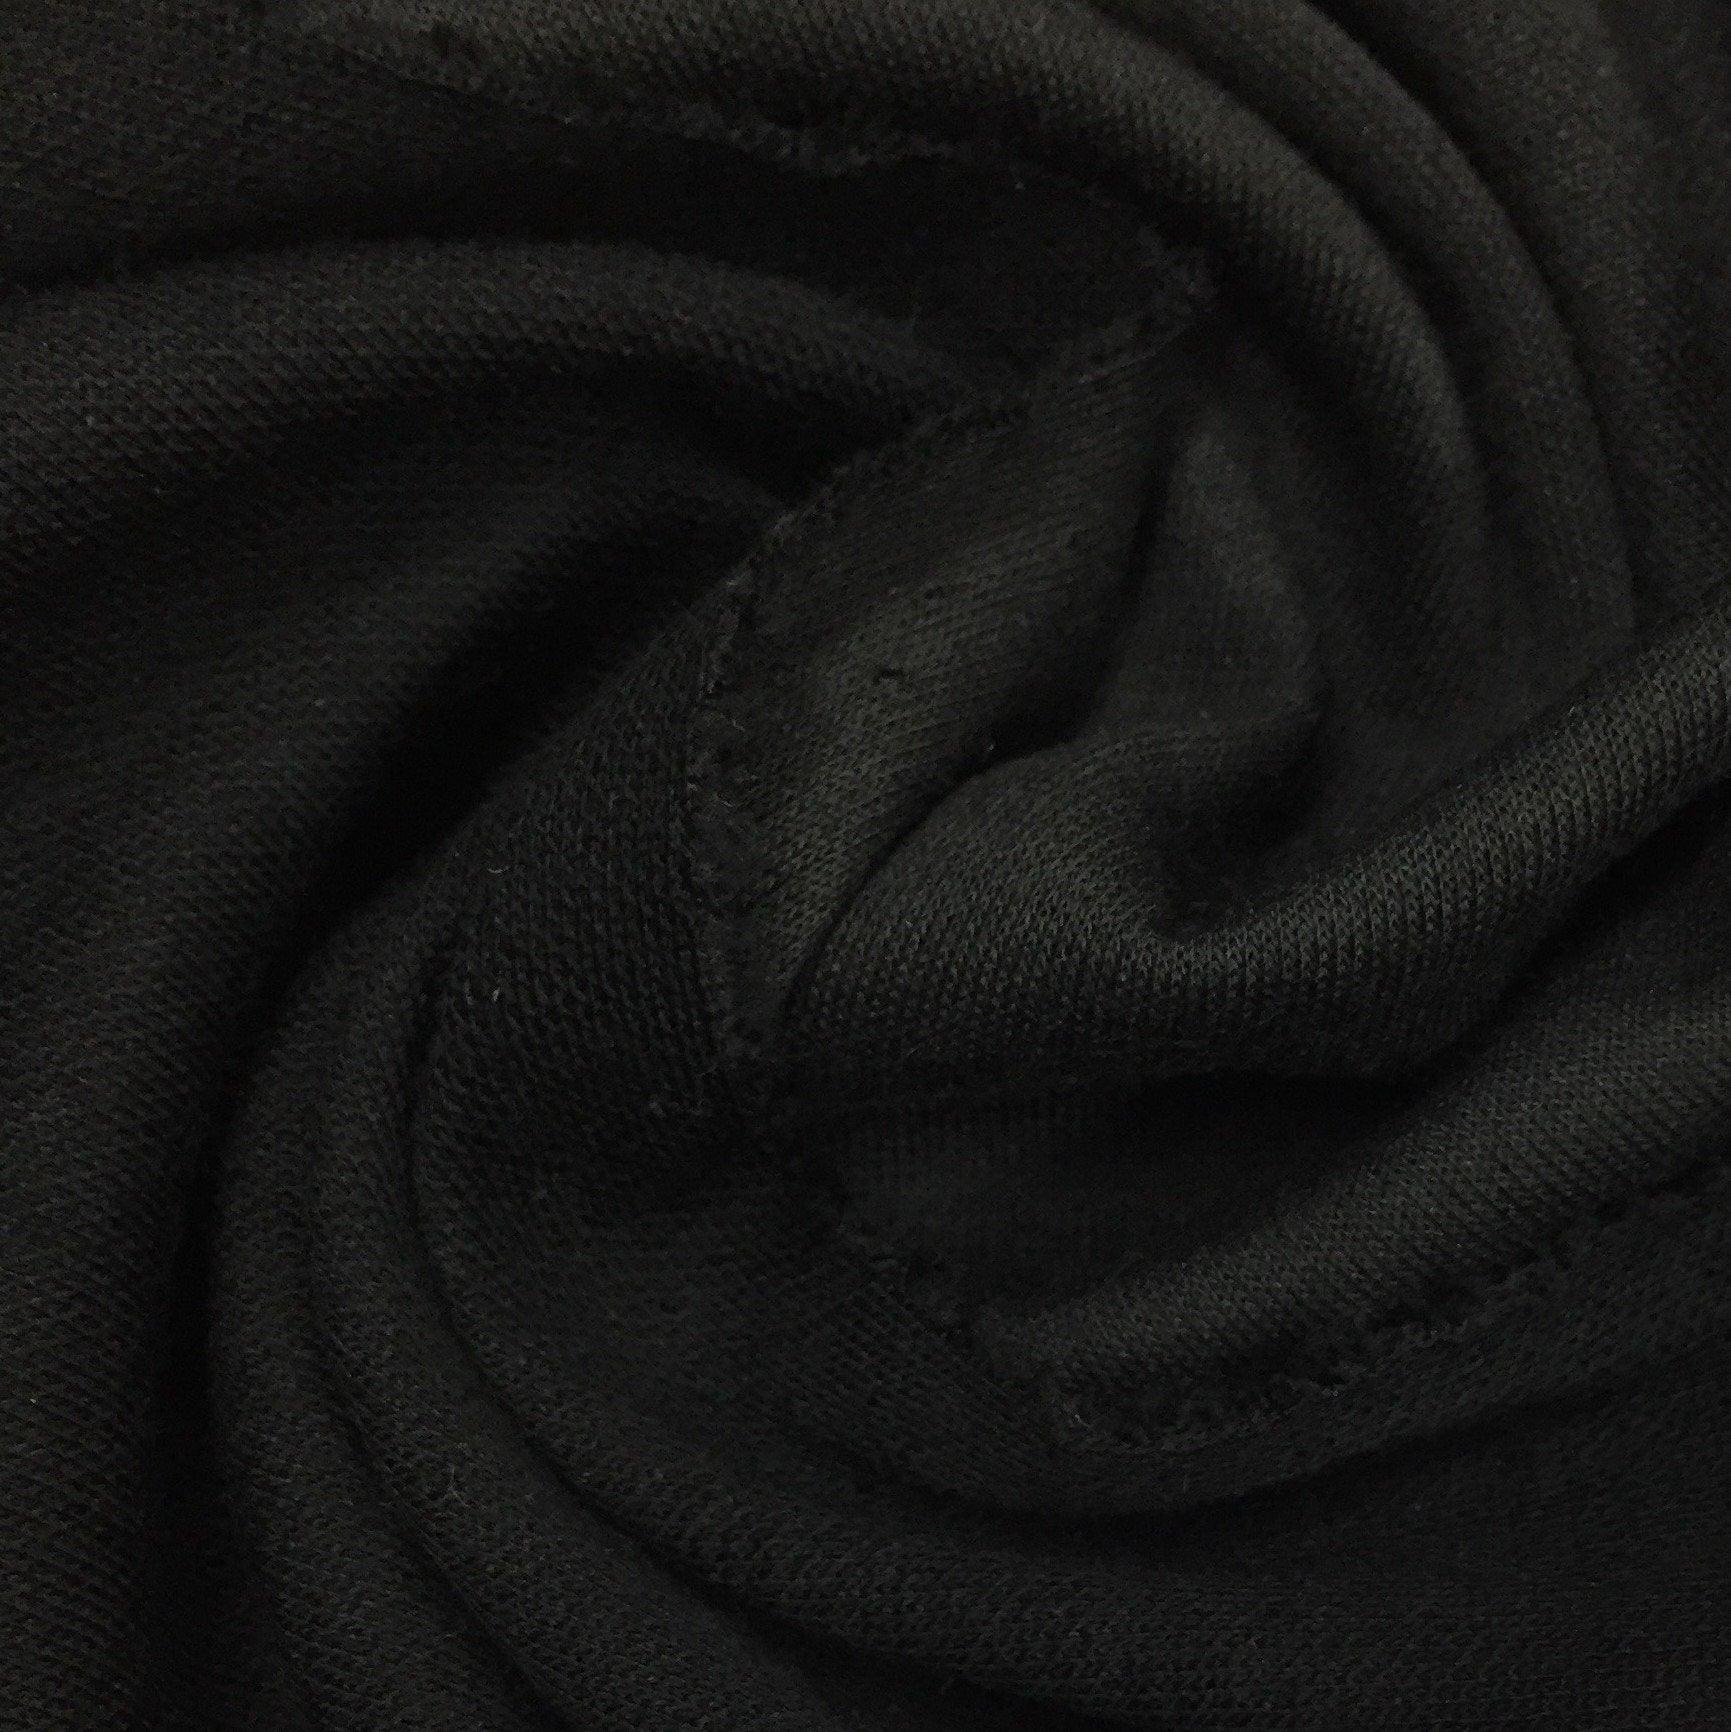 Black on Black Double-Sided Merino Wool Jersey Fabric - Nature's Fabrics